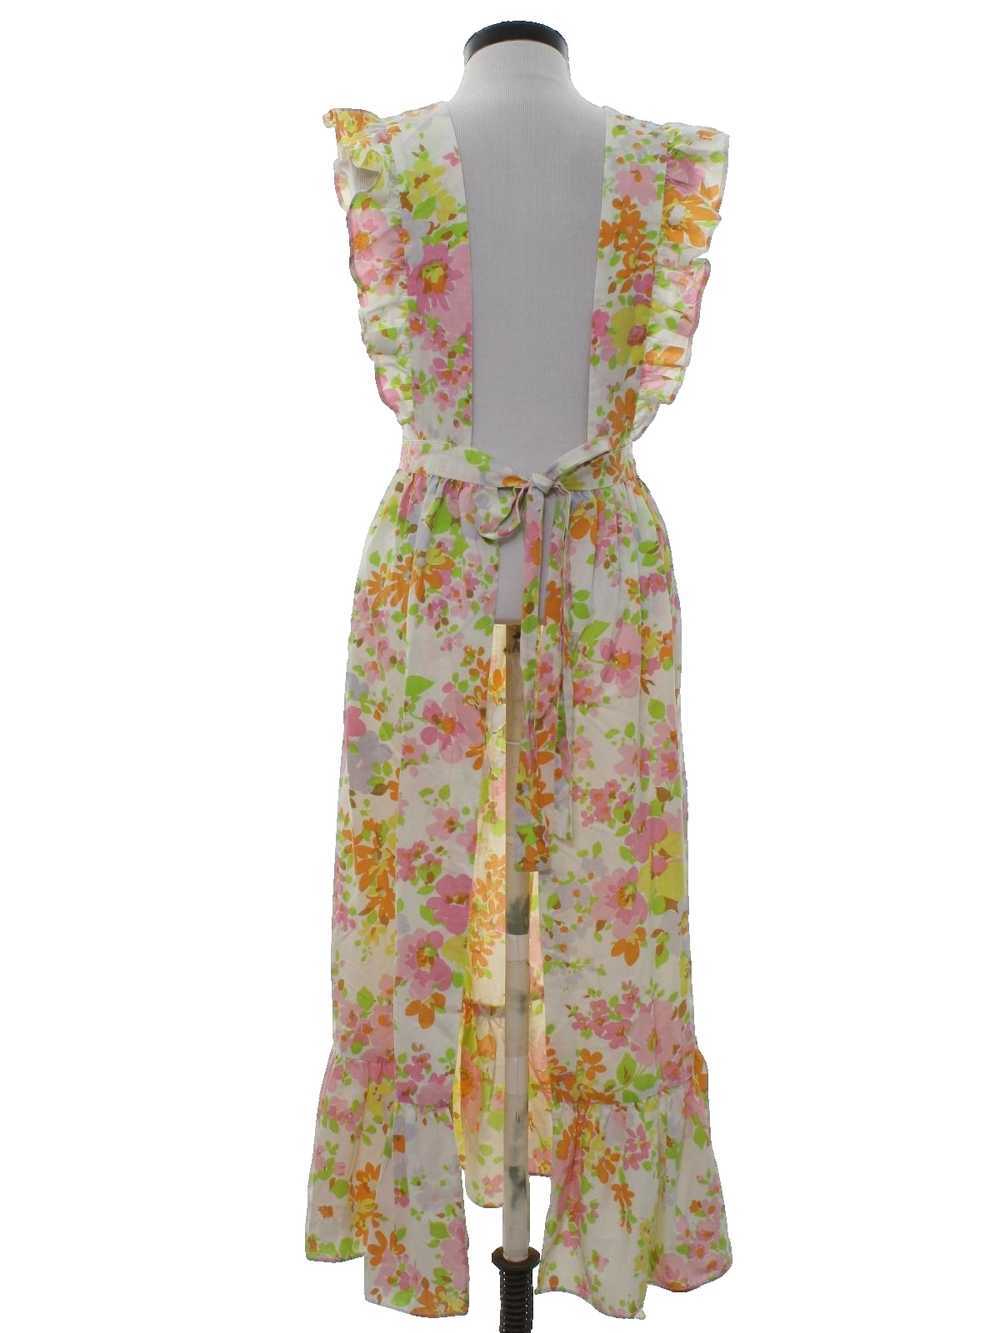 1970's Accessories - Apron Dress - image 3